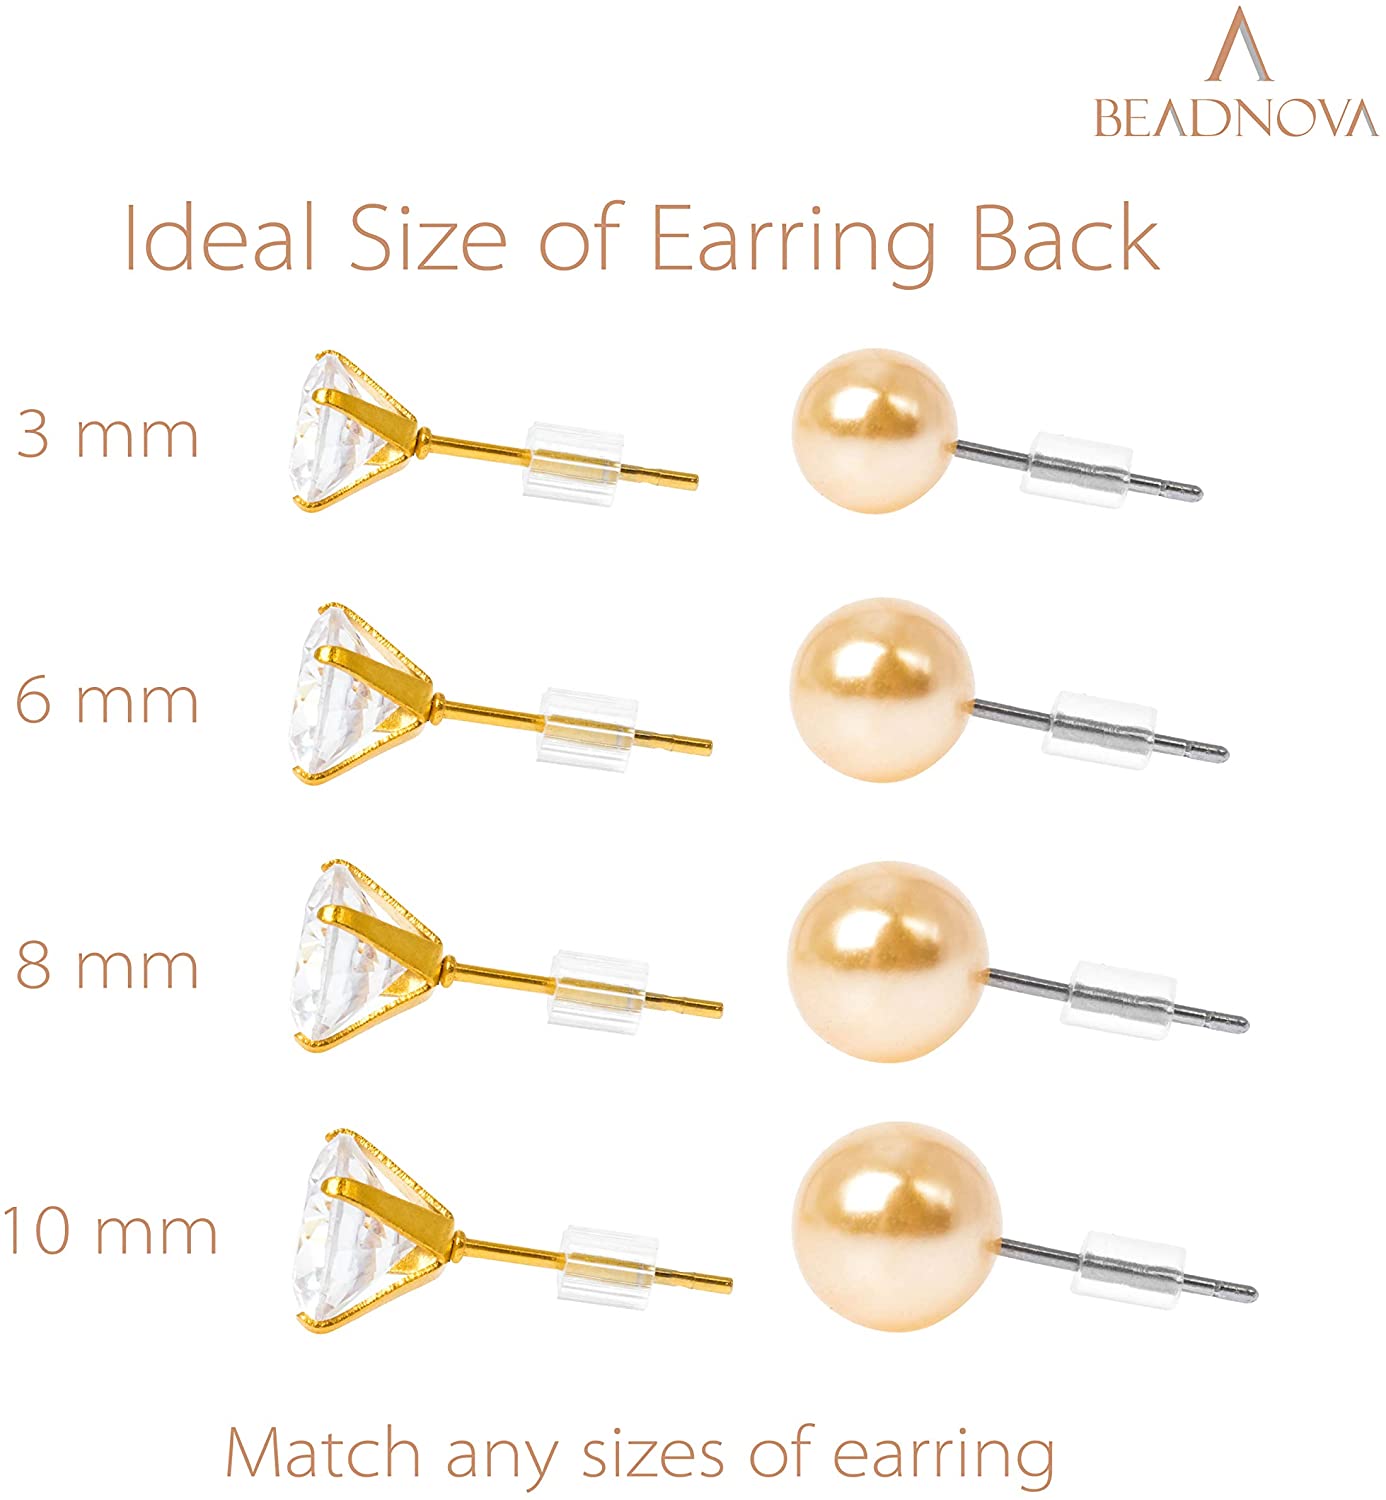 https://www.beadnova.com/wp-content/uploads/2021/01/BEADNOVA-Clear-Plastic-Earring-Backs-Rubber-Earring-Backings-Replacement-1000pcs-5.jpg